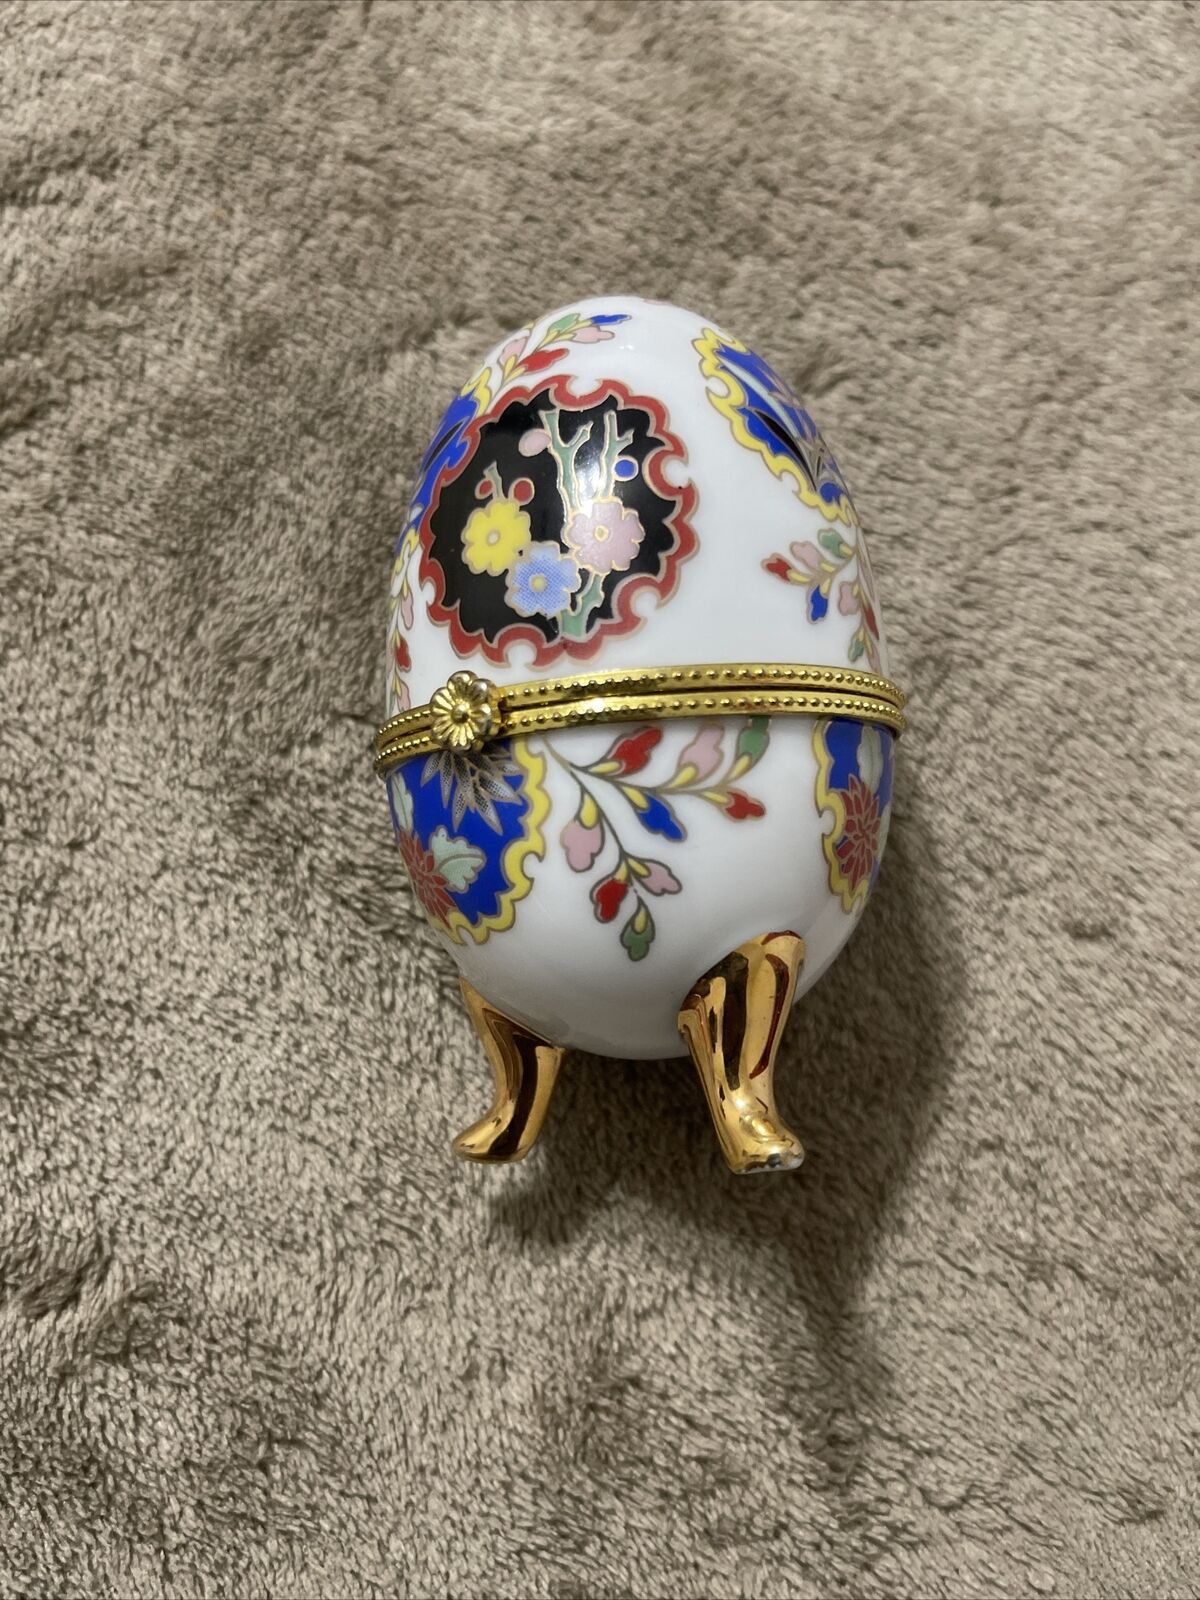 Hinged Ceramic Egg Gold Tone Flower Floral Print Trinket Box